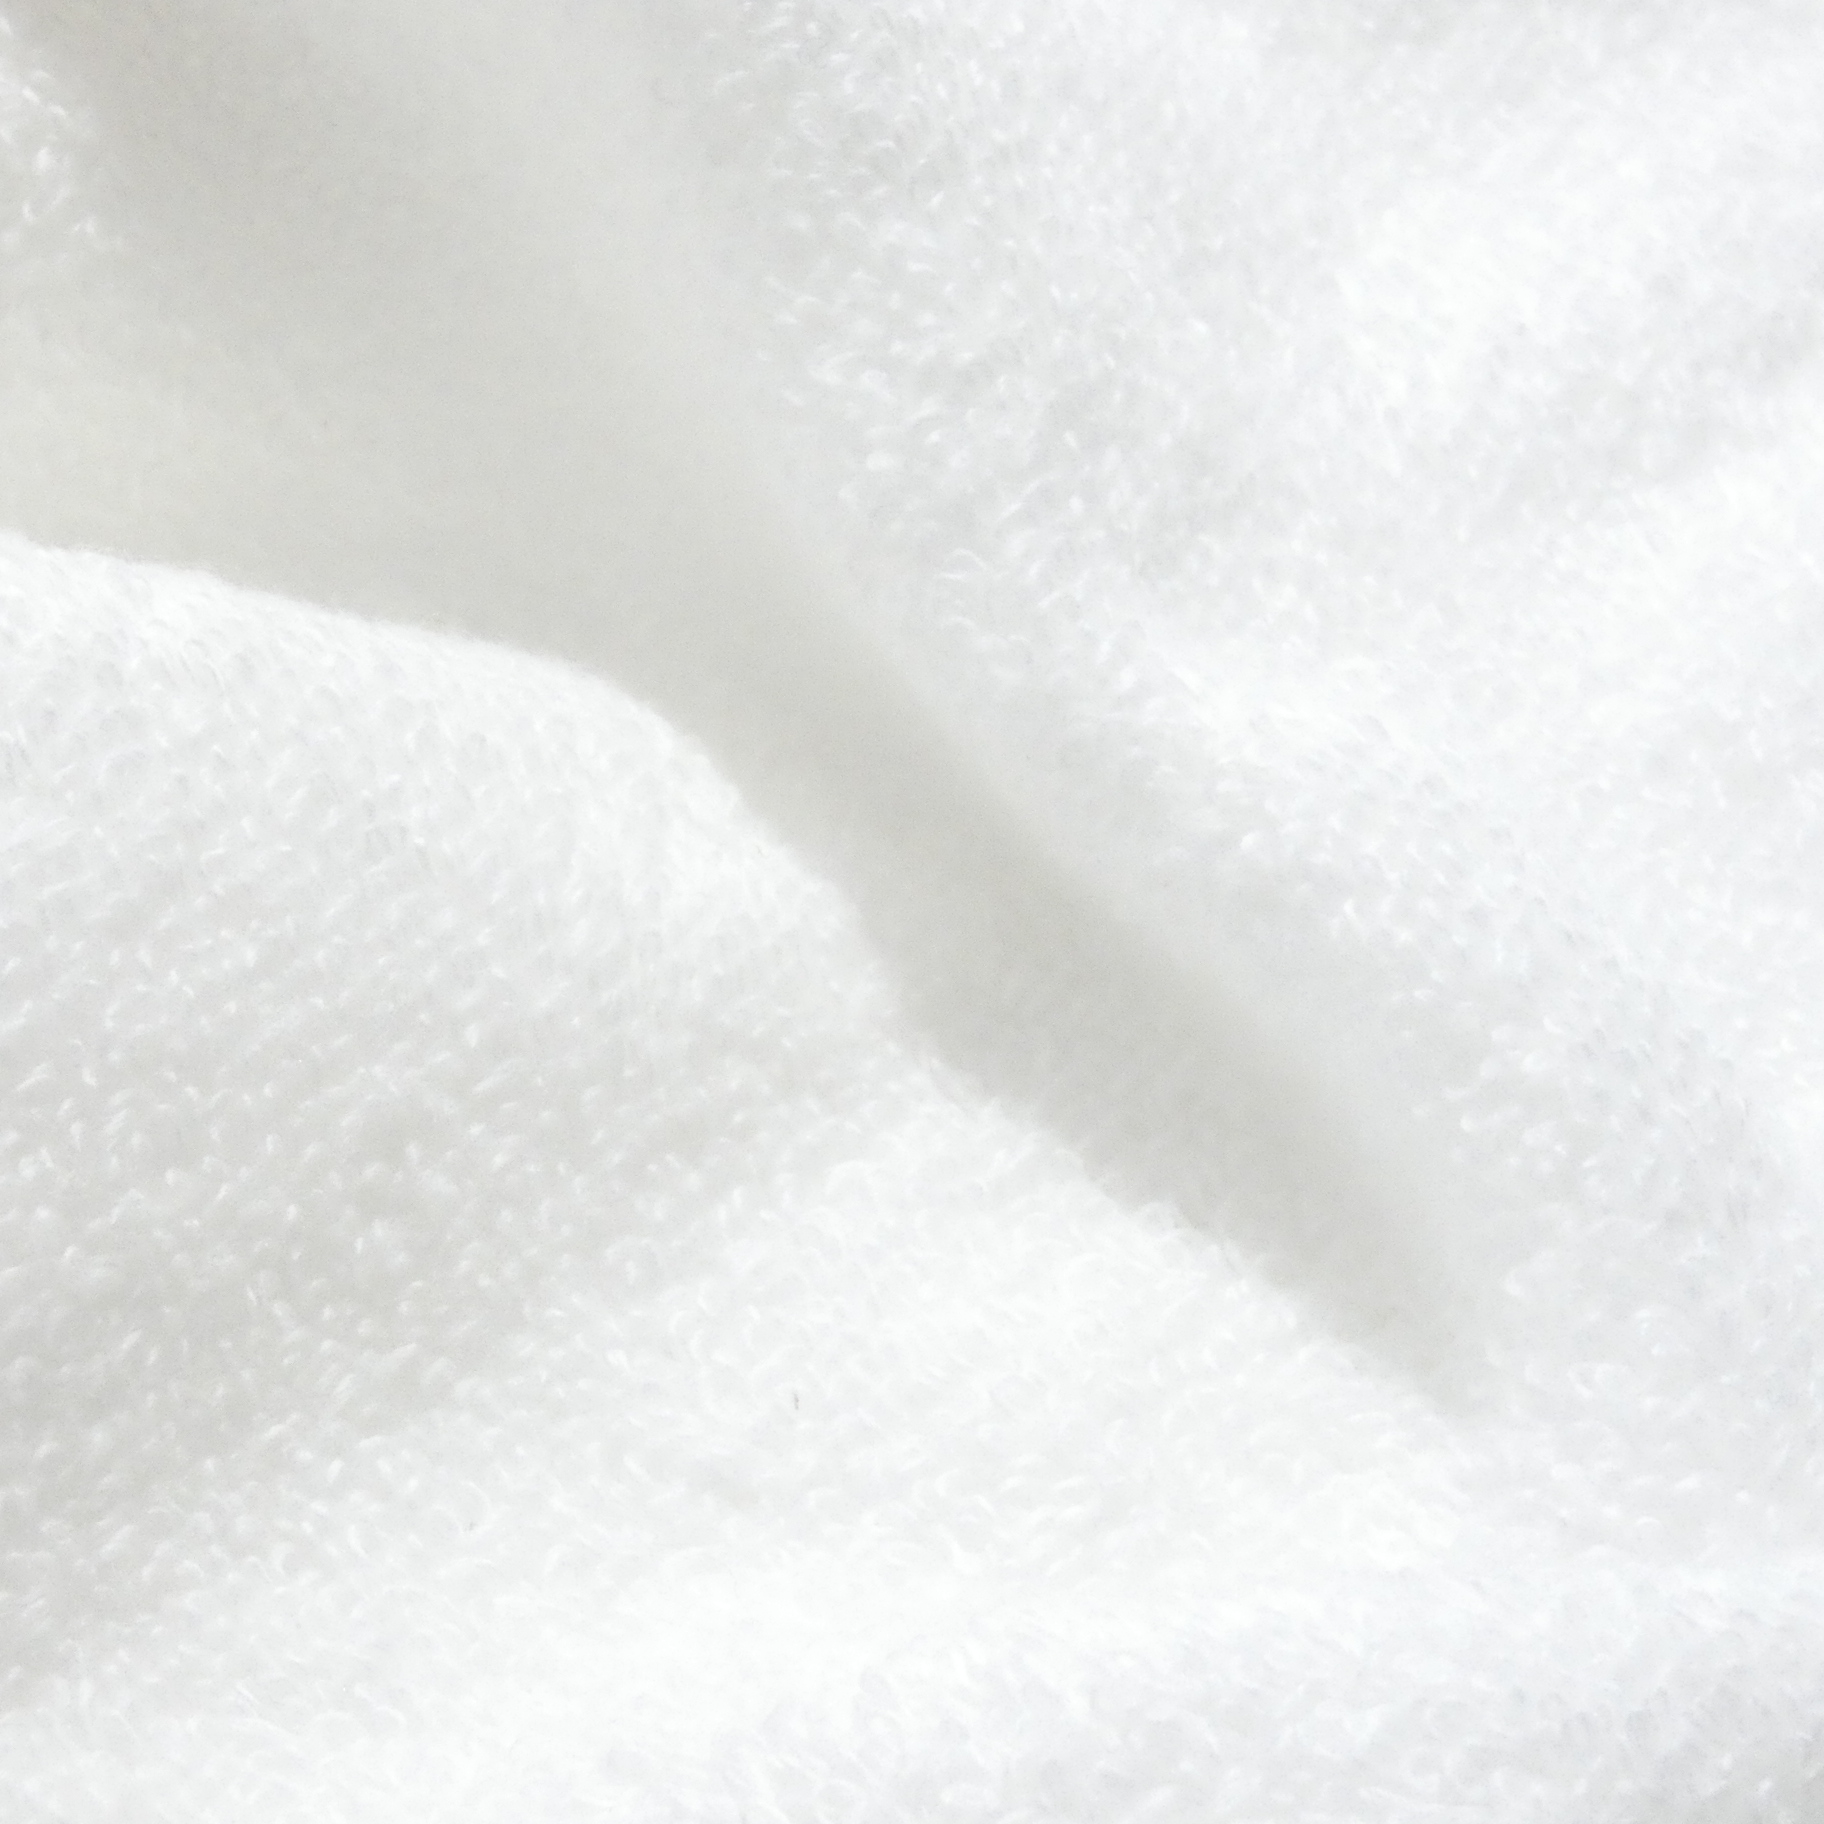 Hand Towel の素材感（むねんし）と高級デザイン仕様について